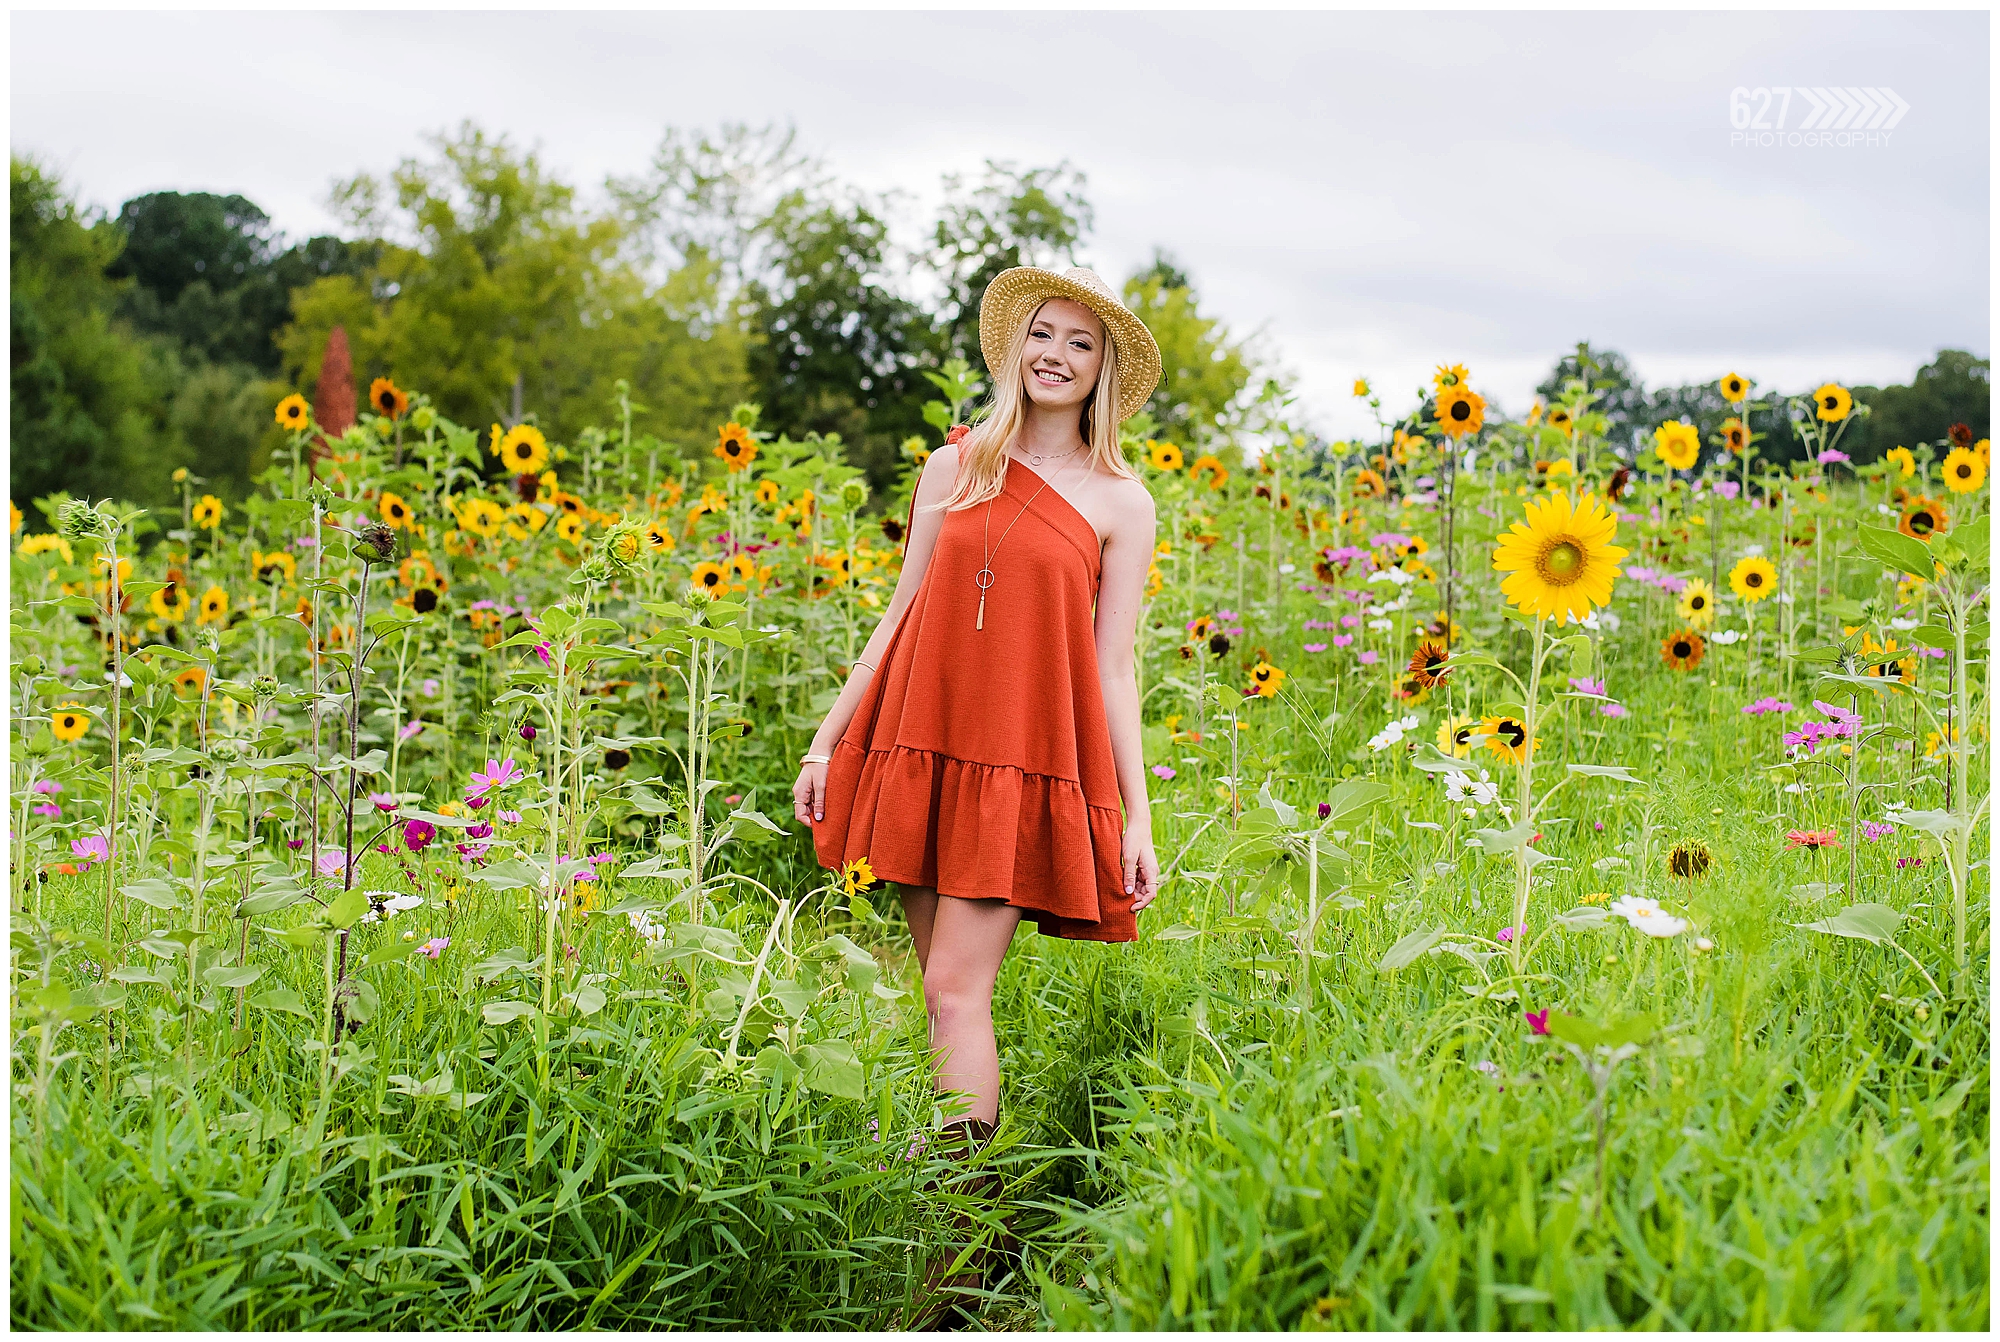 senior girl in flower field with straw hat